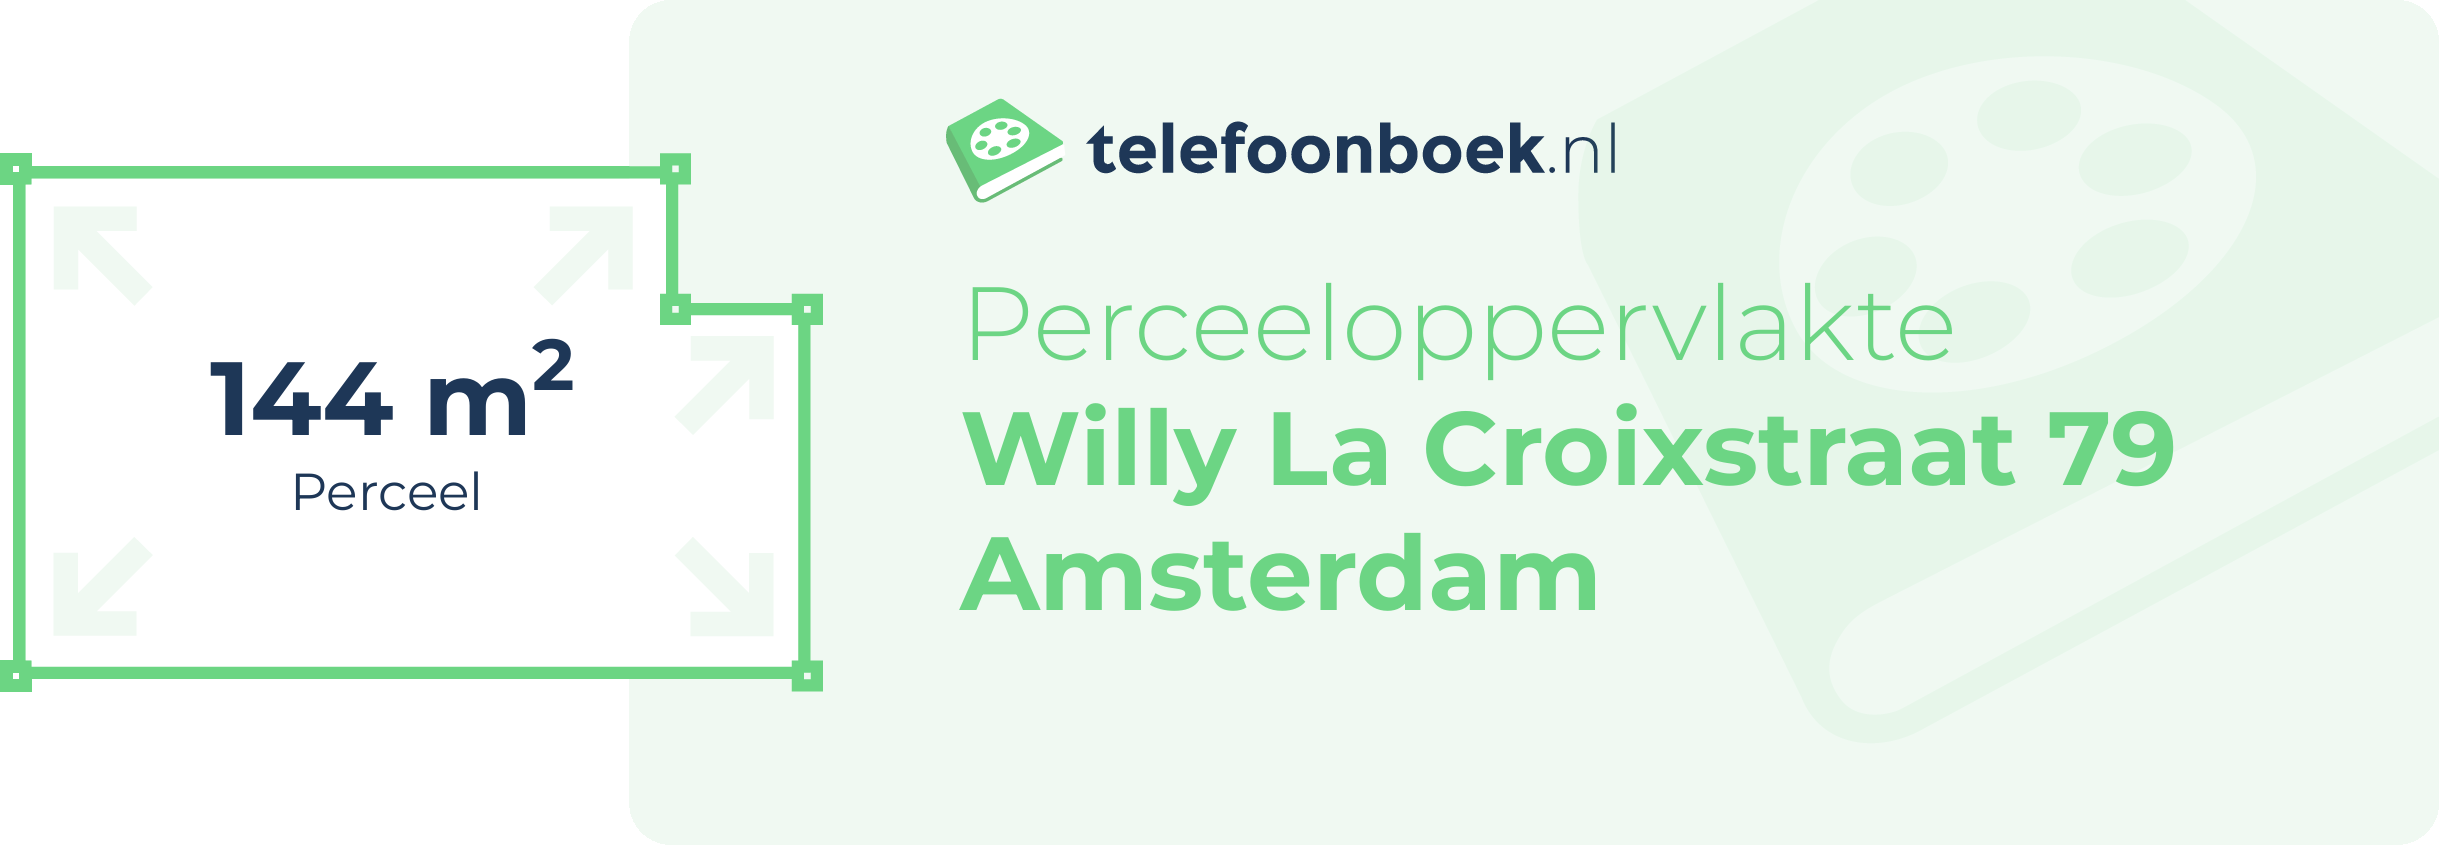 Perceeloppervlakte Willy La Croixstraat 79 Amsterdam